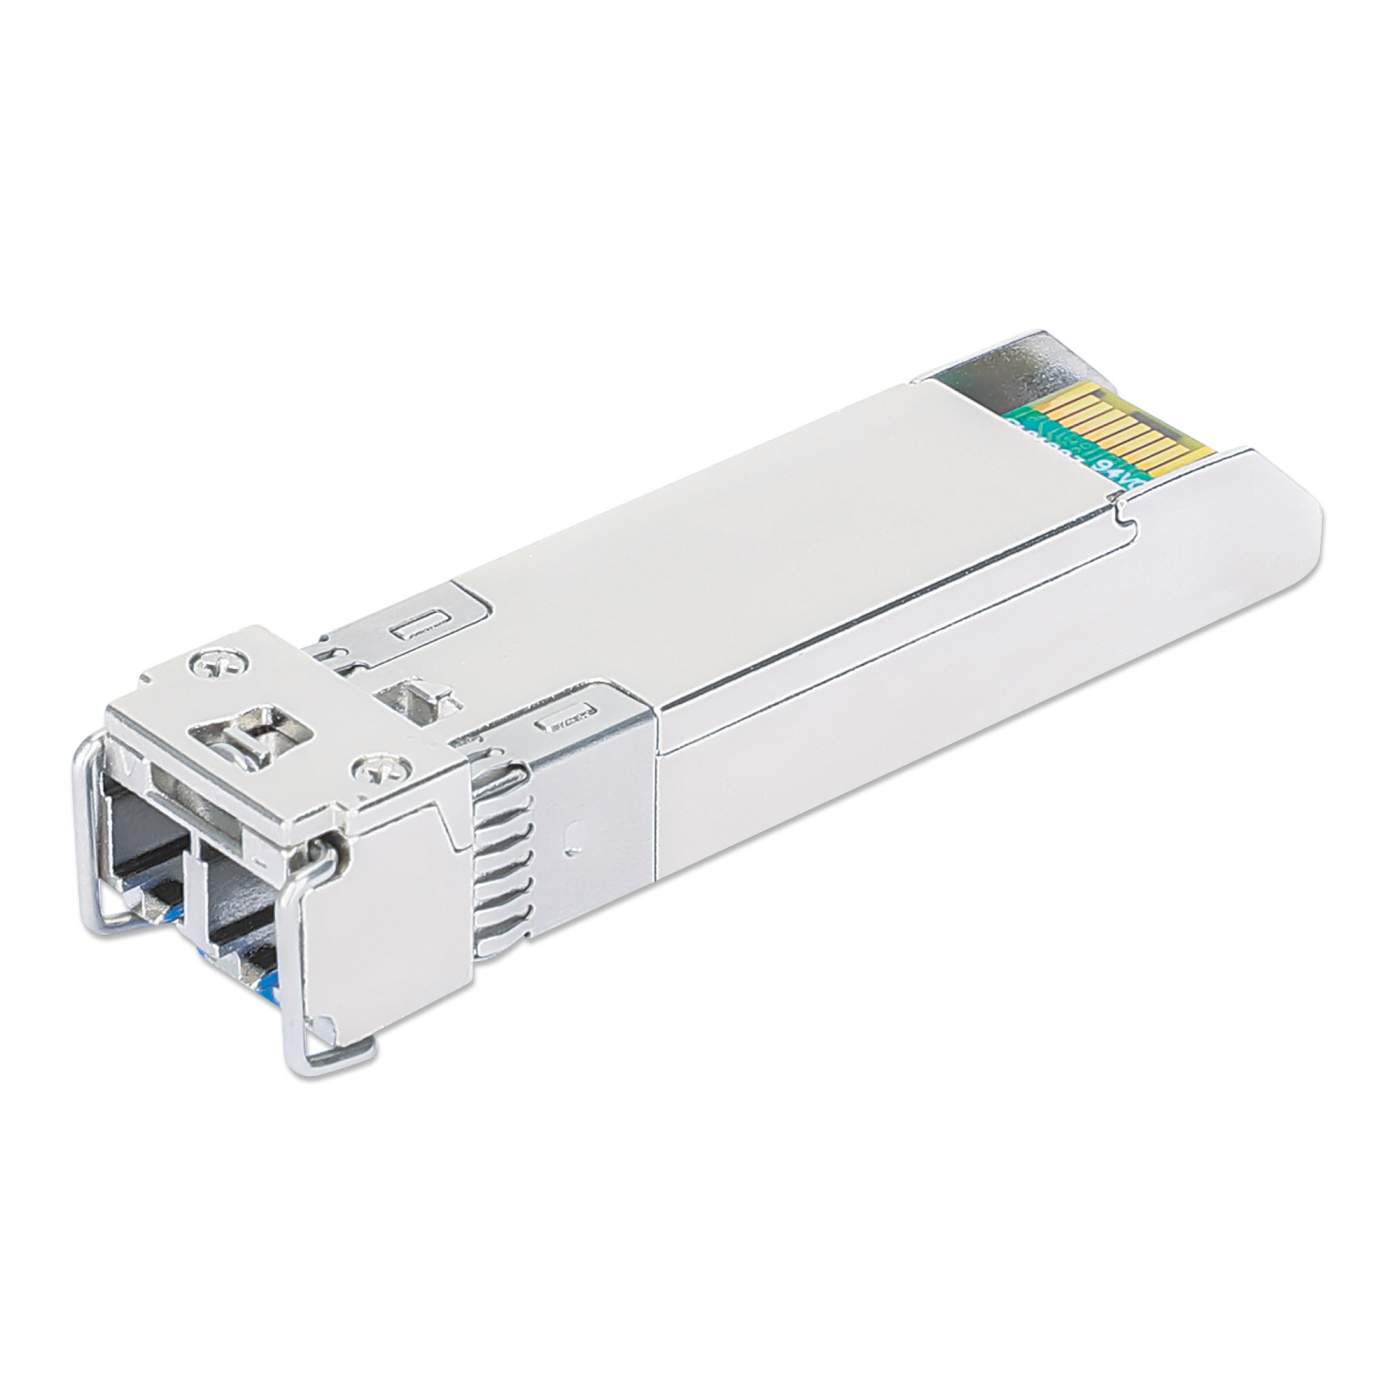 10 Gigabit Fiber SFP+ Optical Transceiver Module Image 3